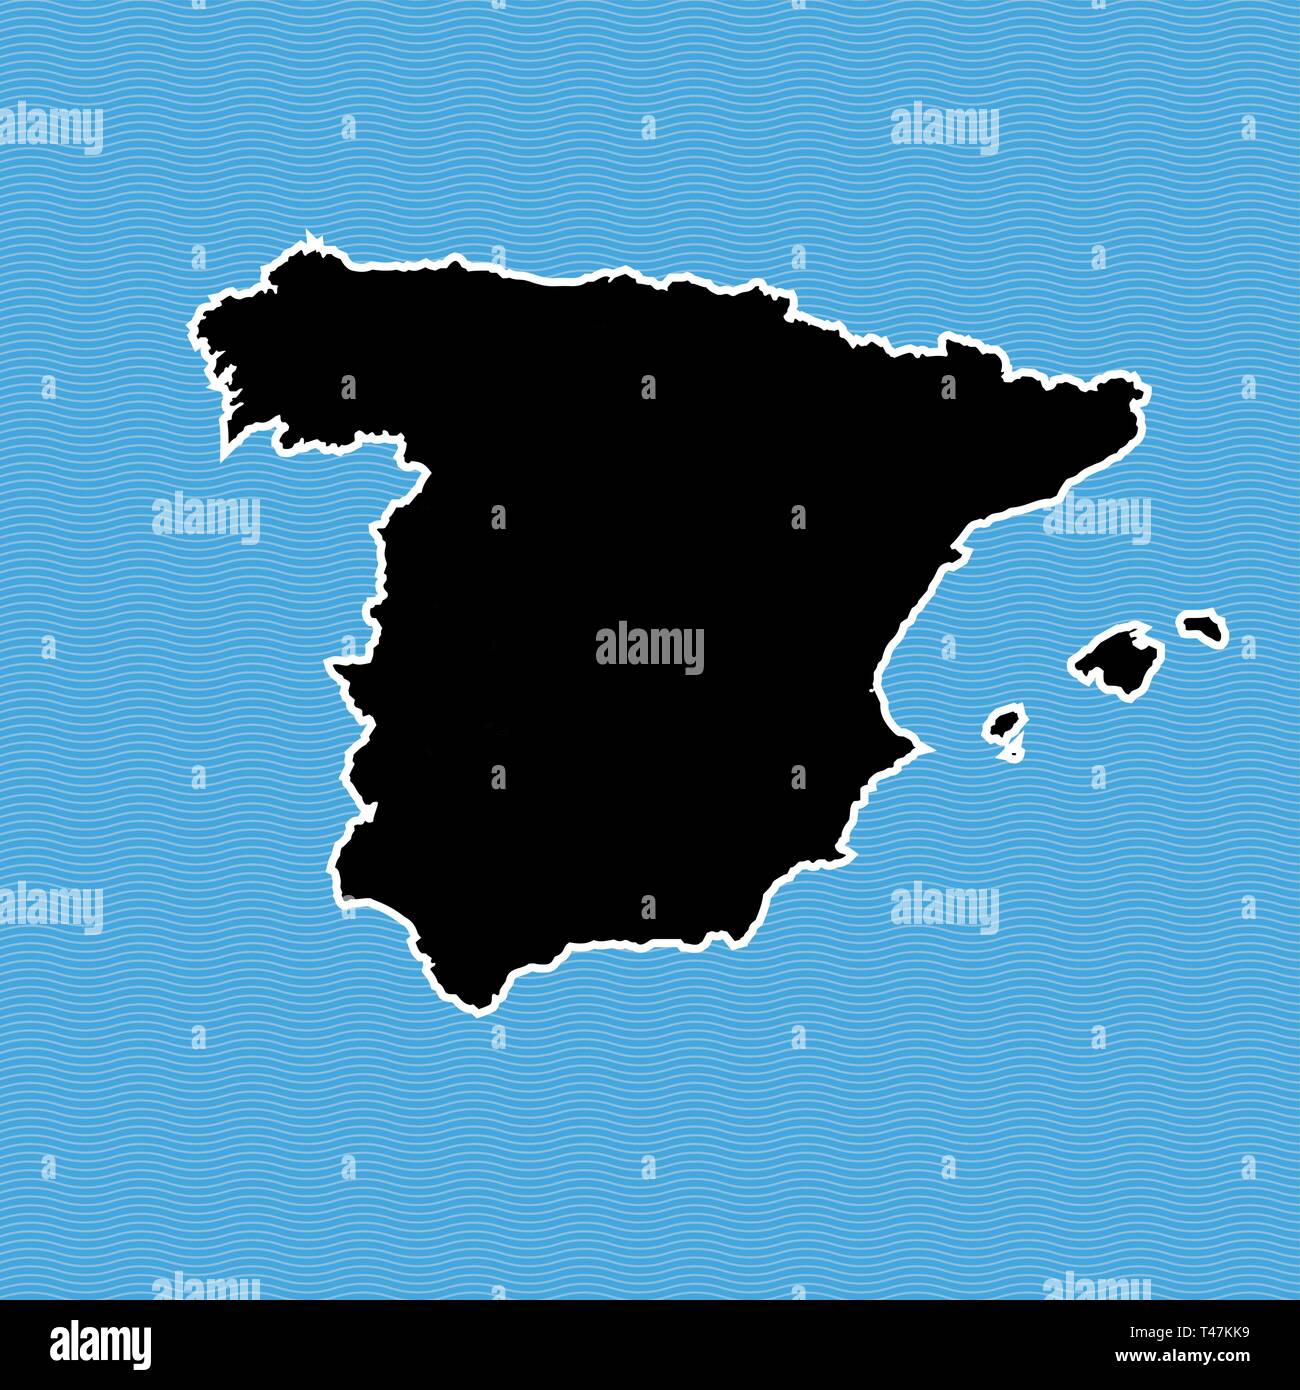 Mapa de España como isla. Mapa separados en onda azul de fondo de agua. Ilustración del Vector